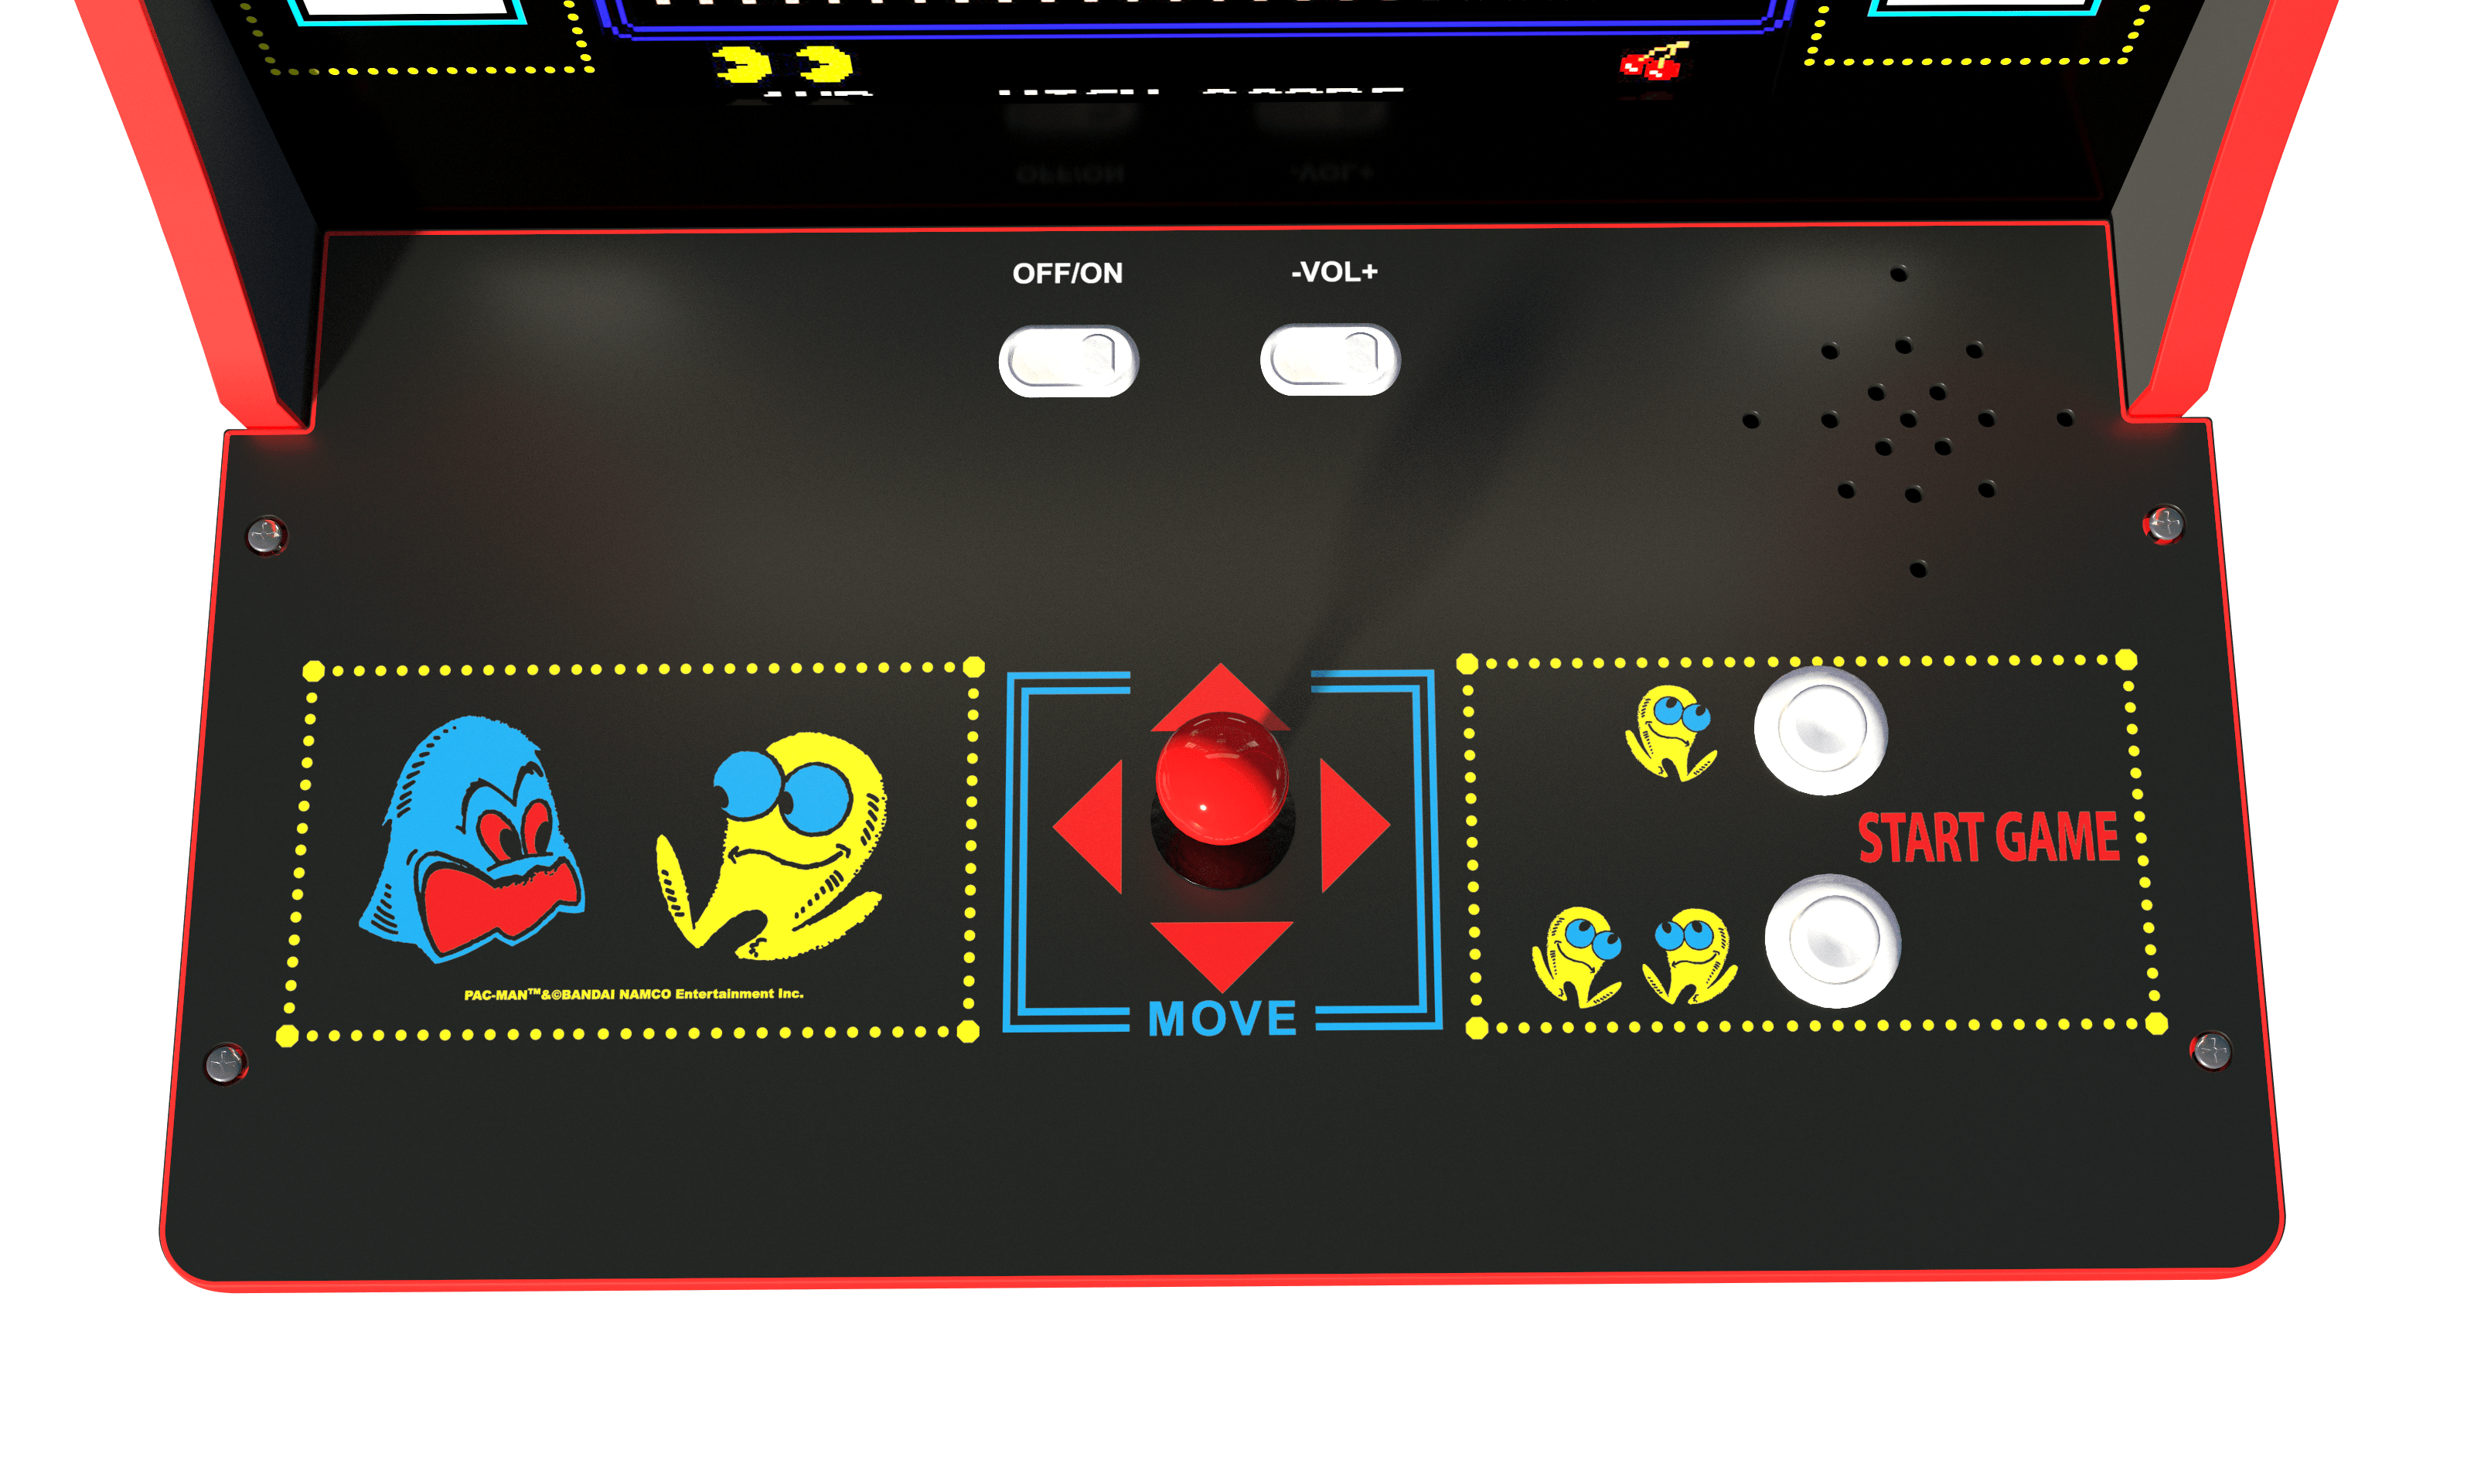 Pac-Man Arcade Machine with Riser, Arcade1UP - image 4 of 8